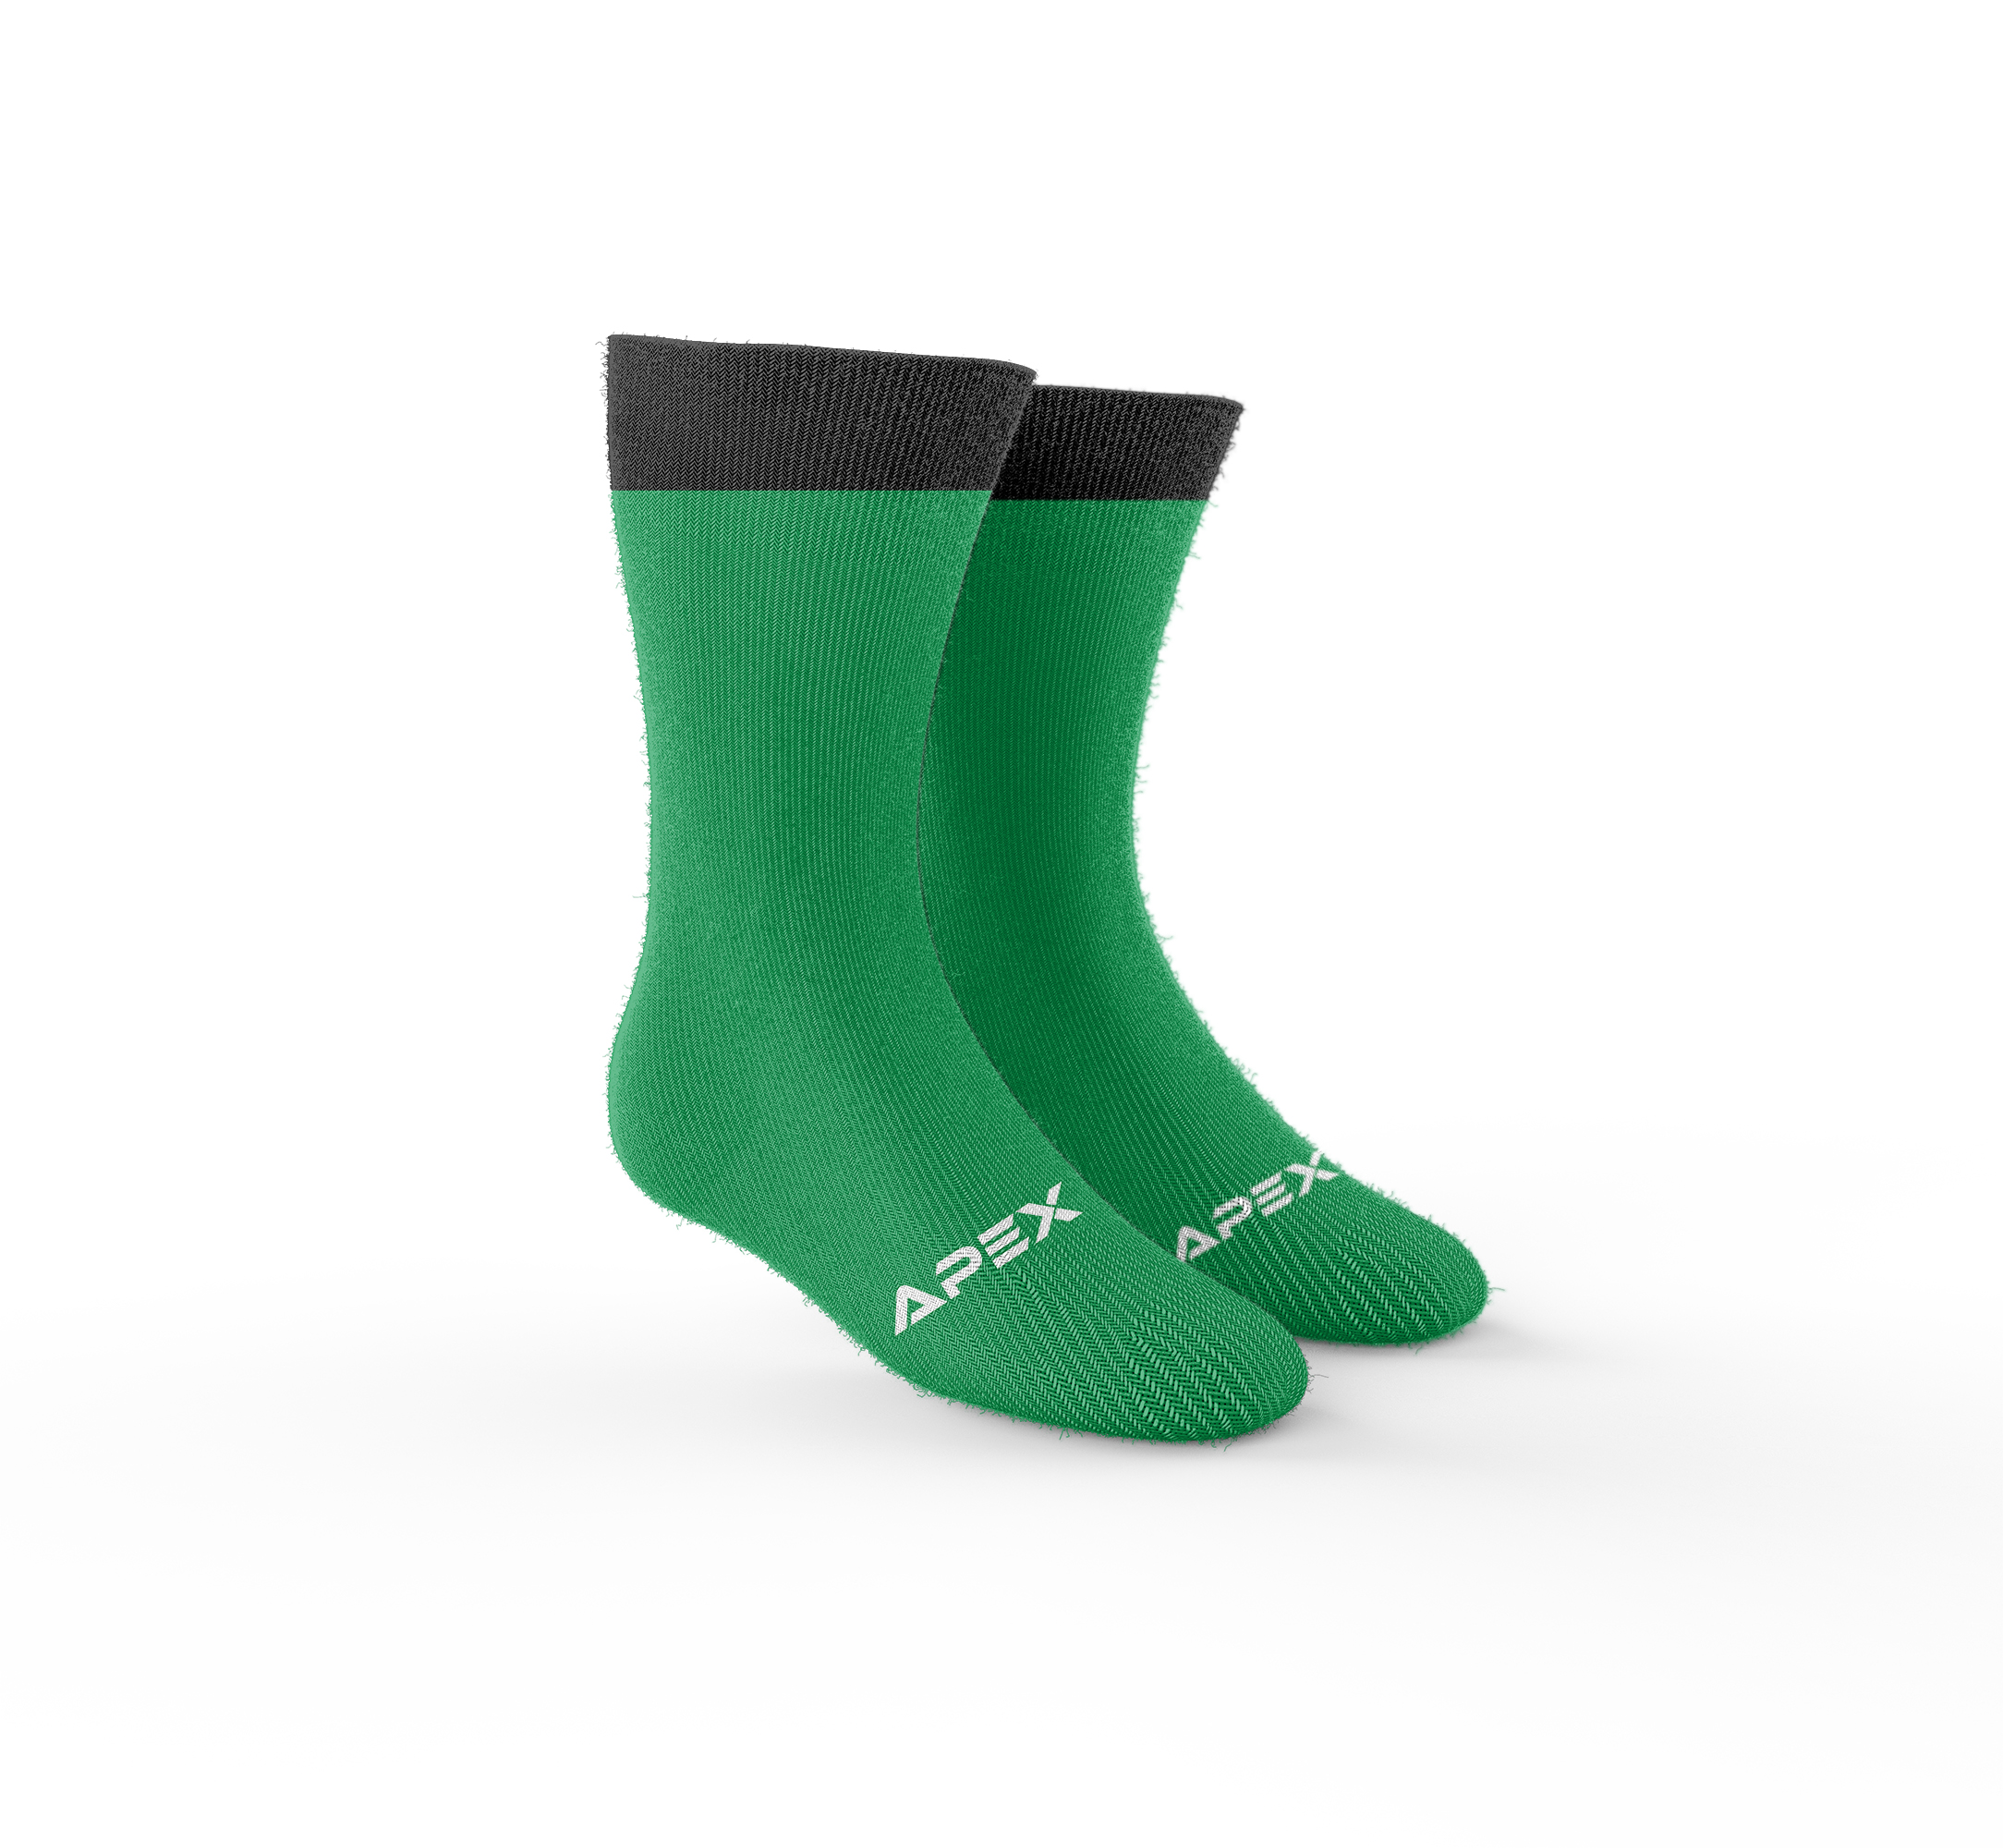 Apex Solace Seamless Leggings Elm Green - Apex Sportswear